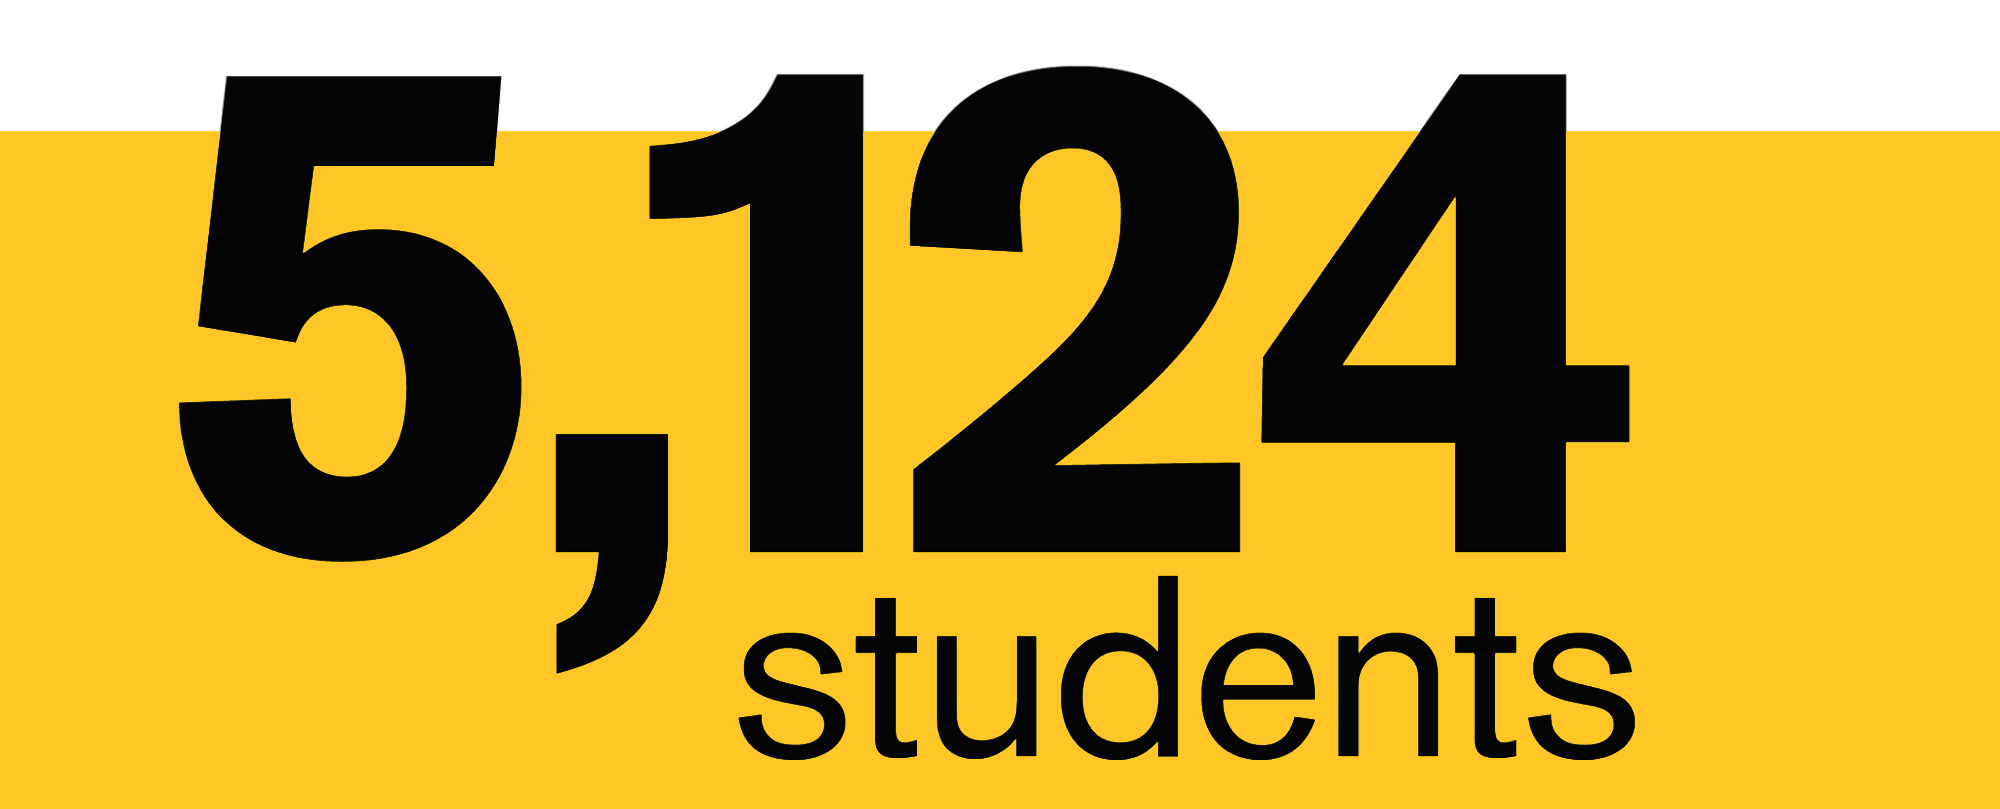 5,124 students